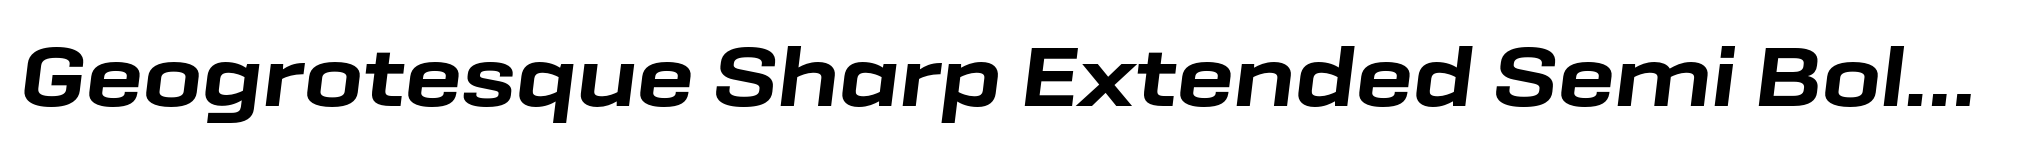 Geogrotesque Sharp Extended Semi Bold Italic image